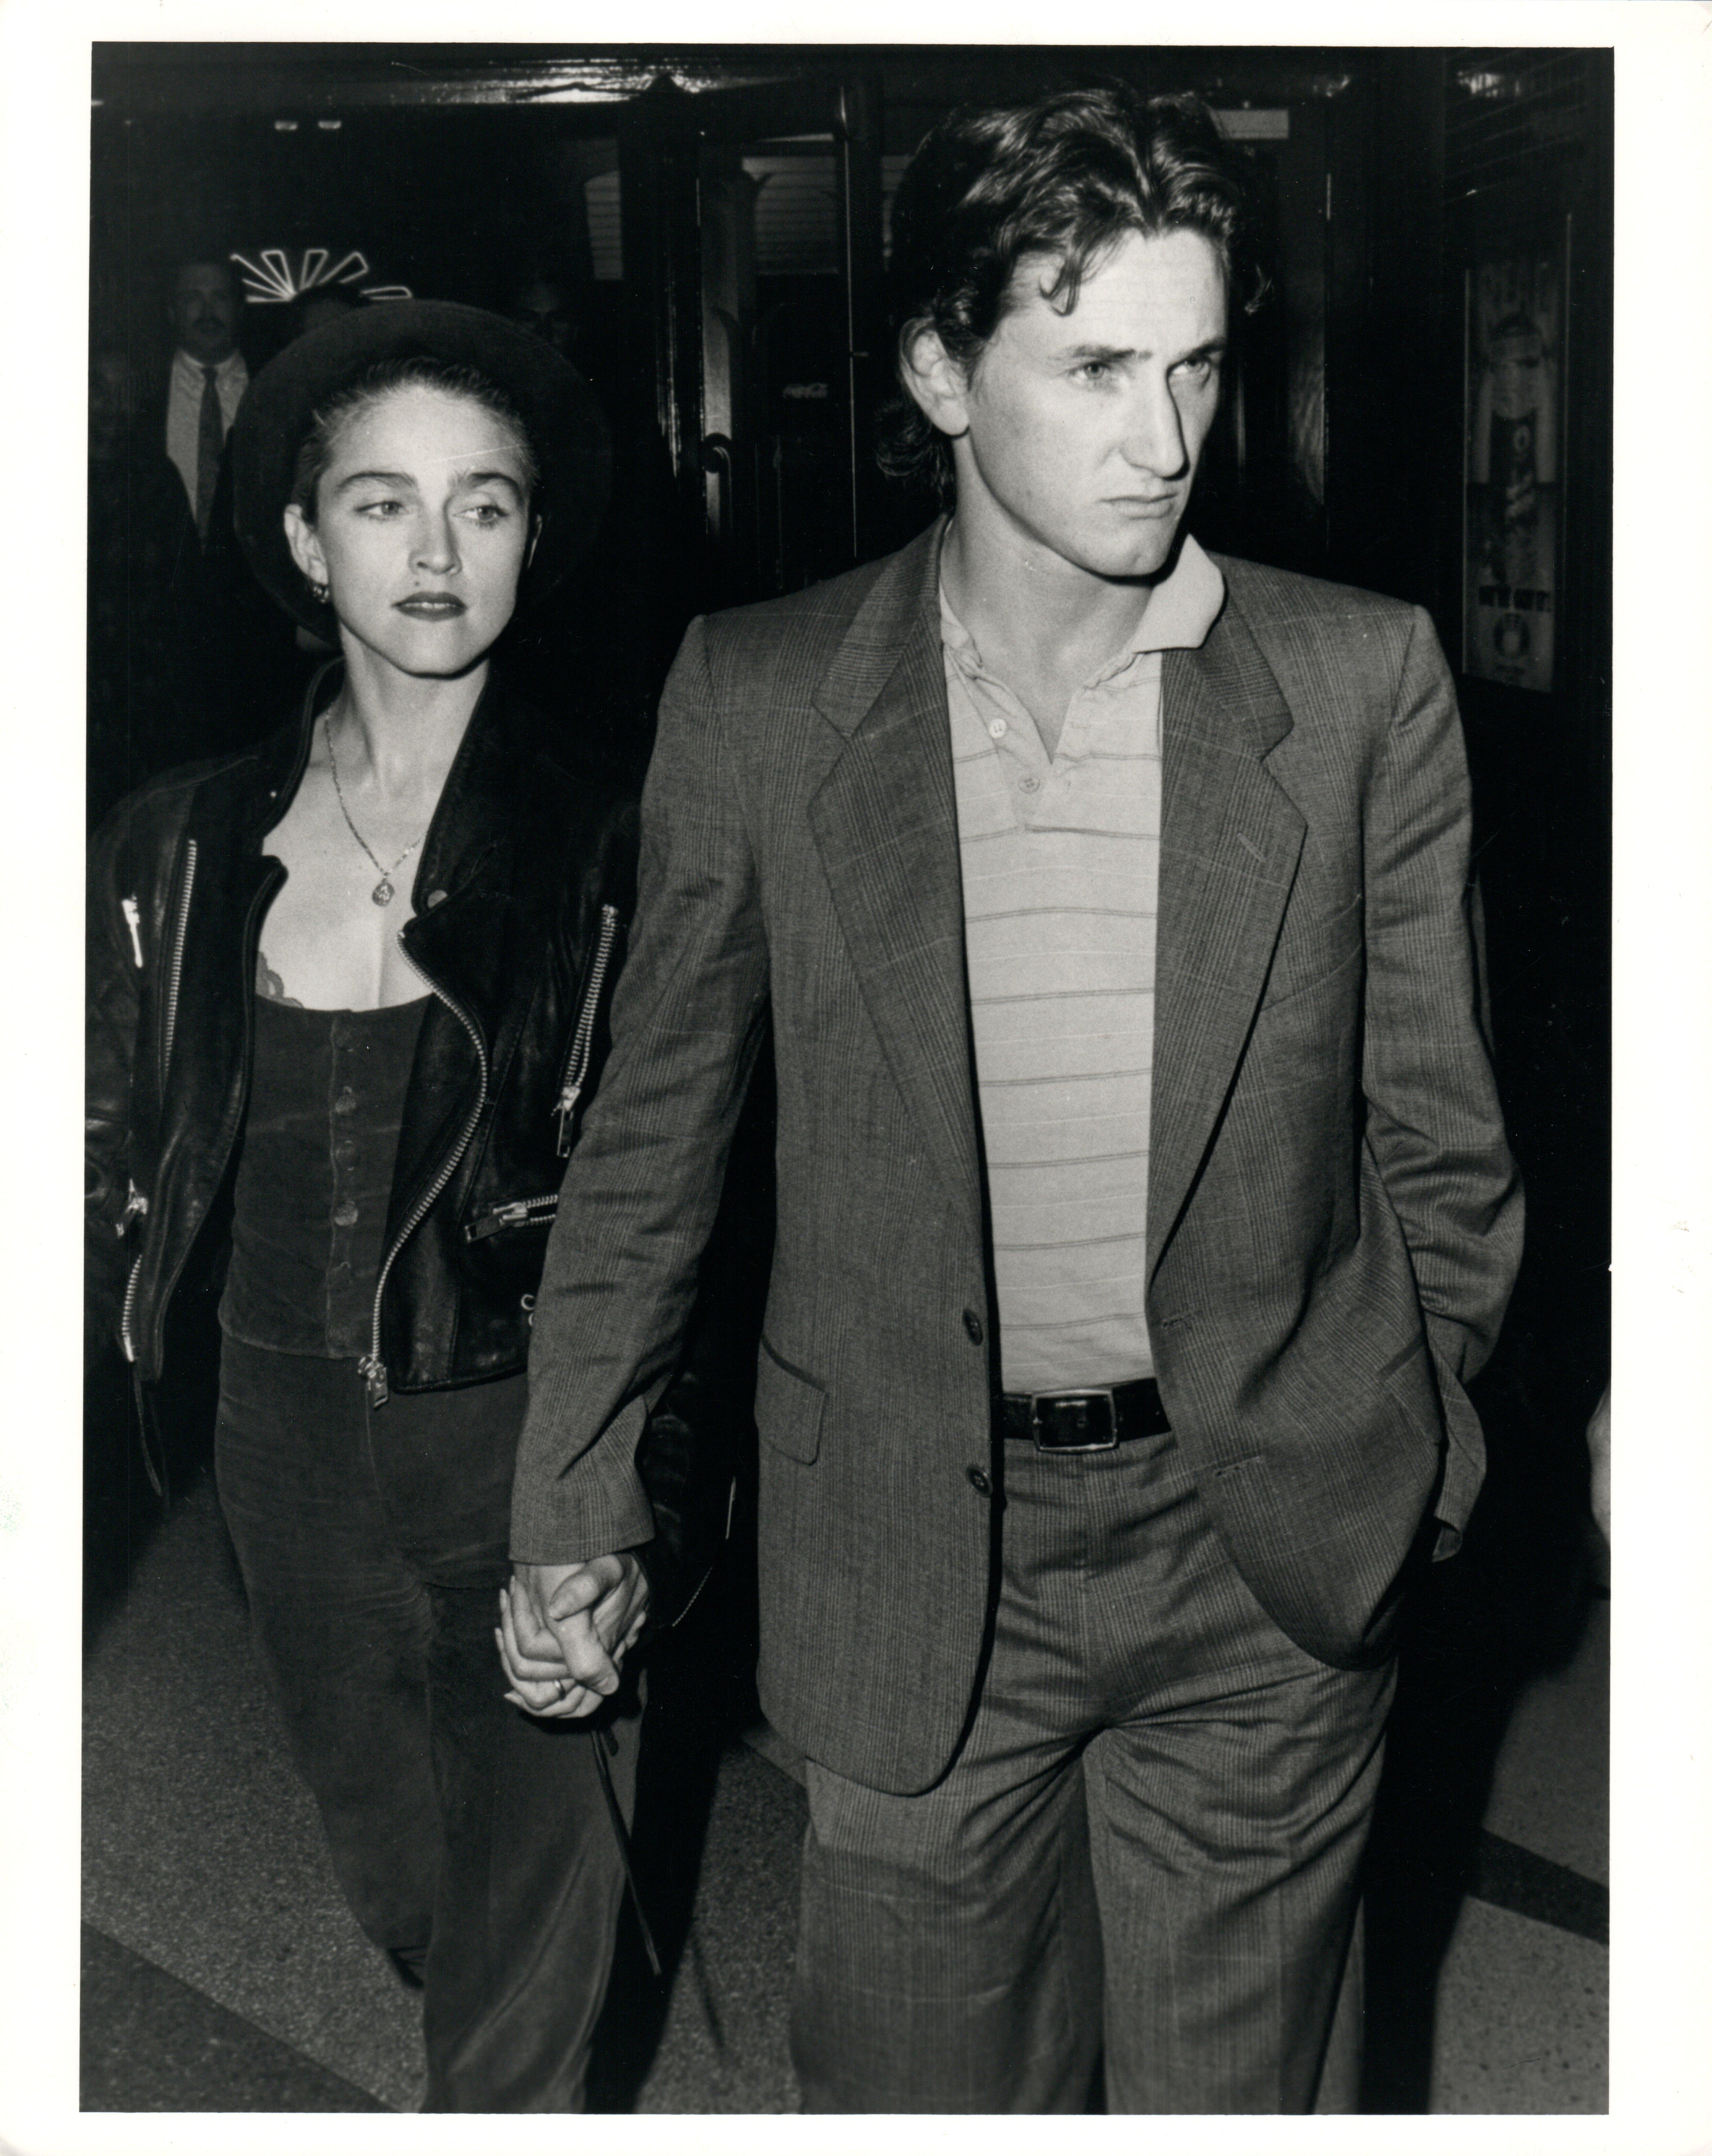 Steve Granitz Black and White Photograph - Madonna Walking with Sean Penn Vintage Original Photograph